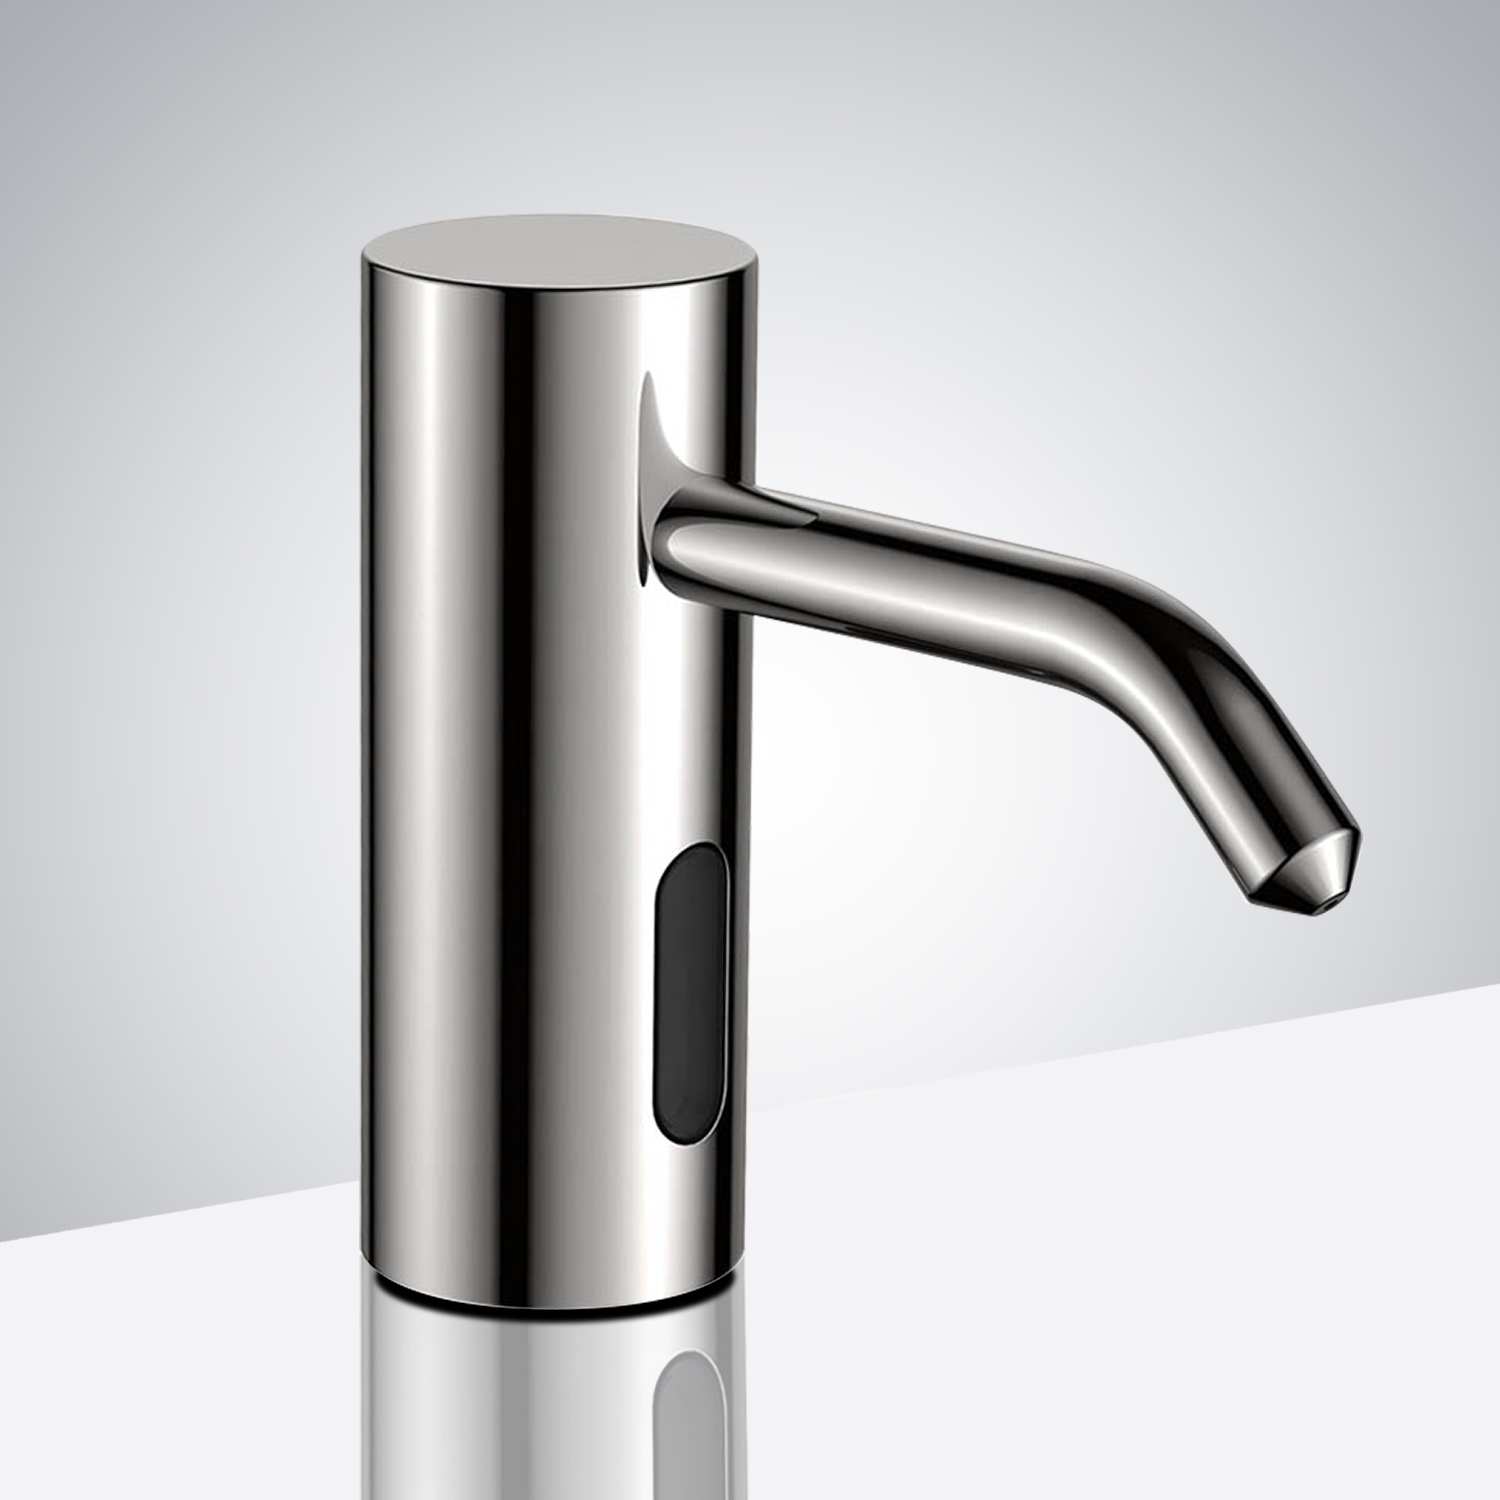 Wella Chrome Brass Deck Mount Commercial Motion Sensor Liquid Soap Dispenser